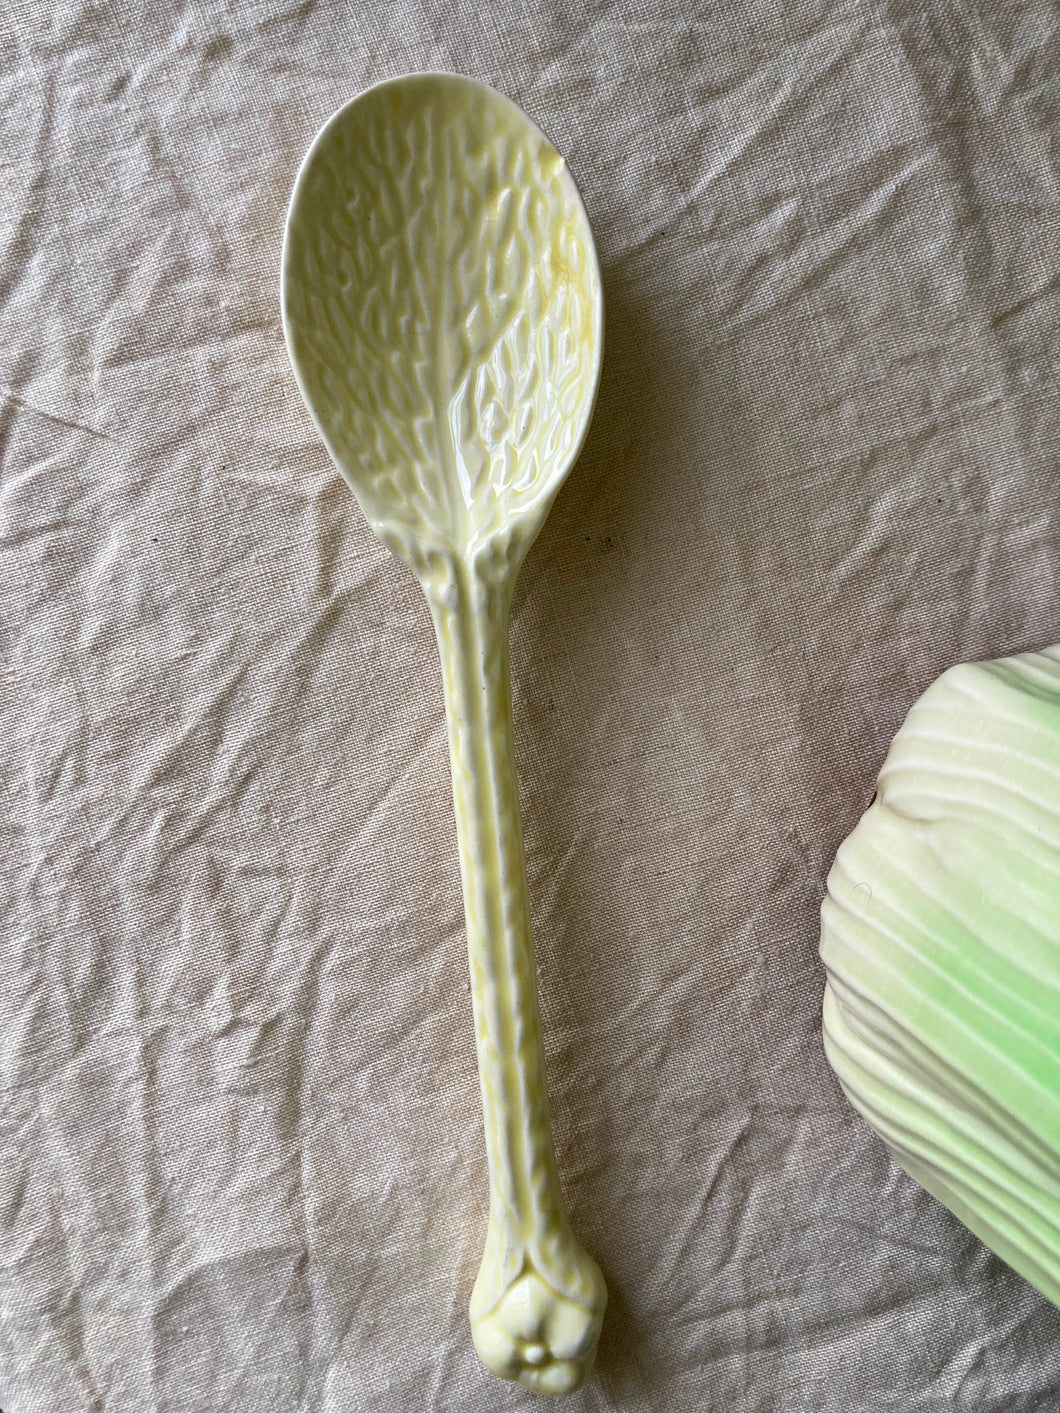 A leafy pale green spoon